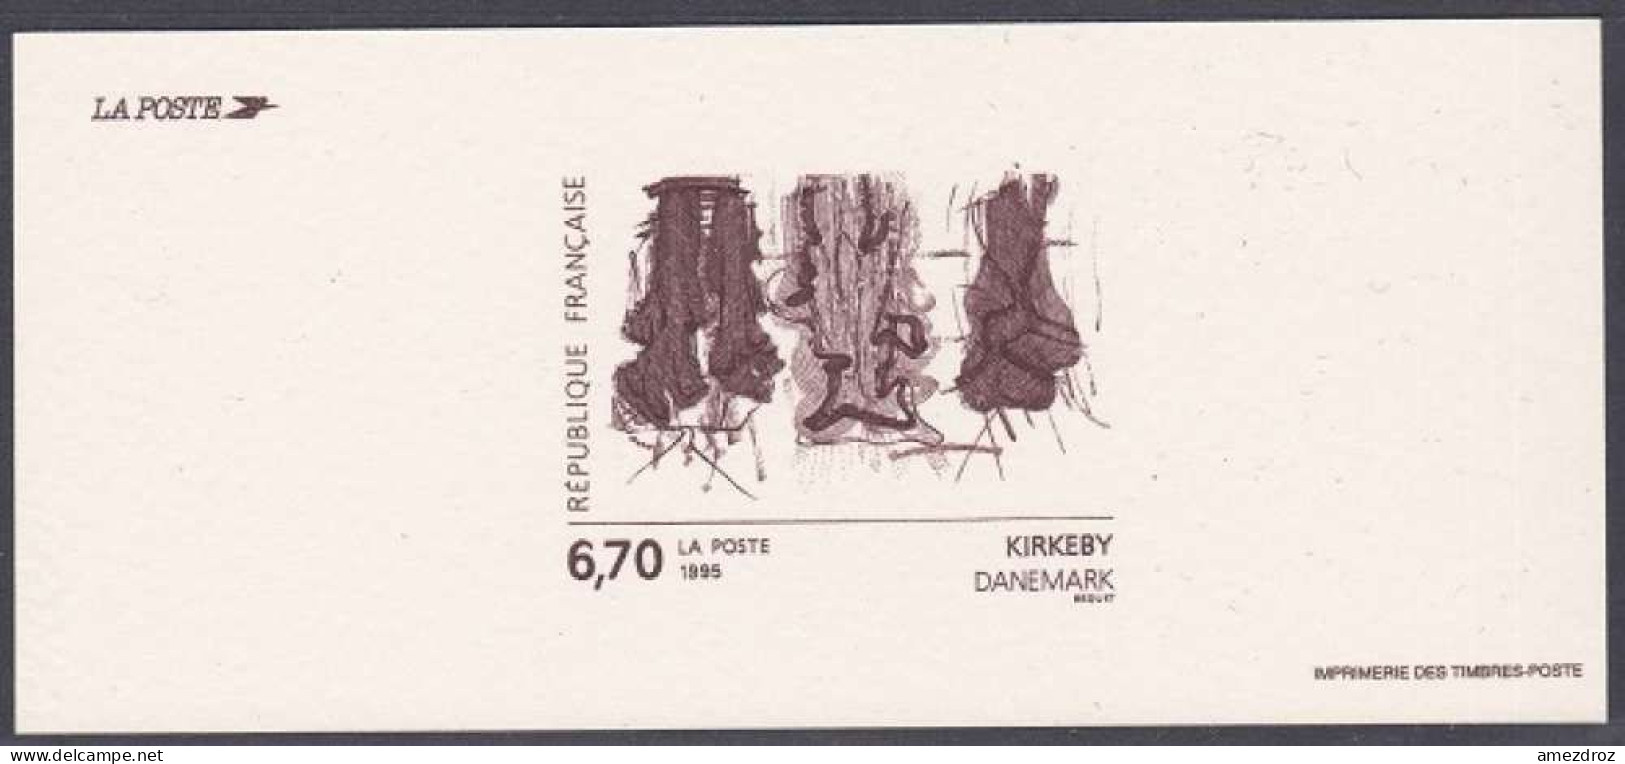 France Gravure Officielle - Tableau De Kirkeby Danemark (4) - Documents Of Postal Services